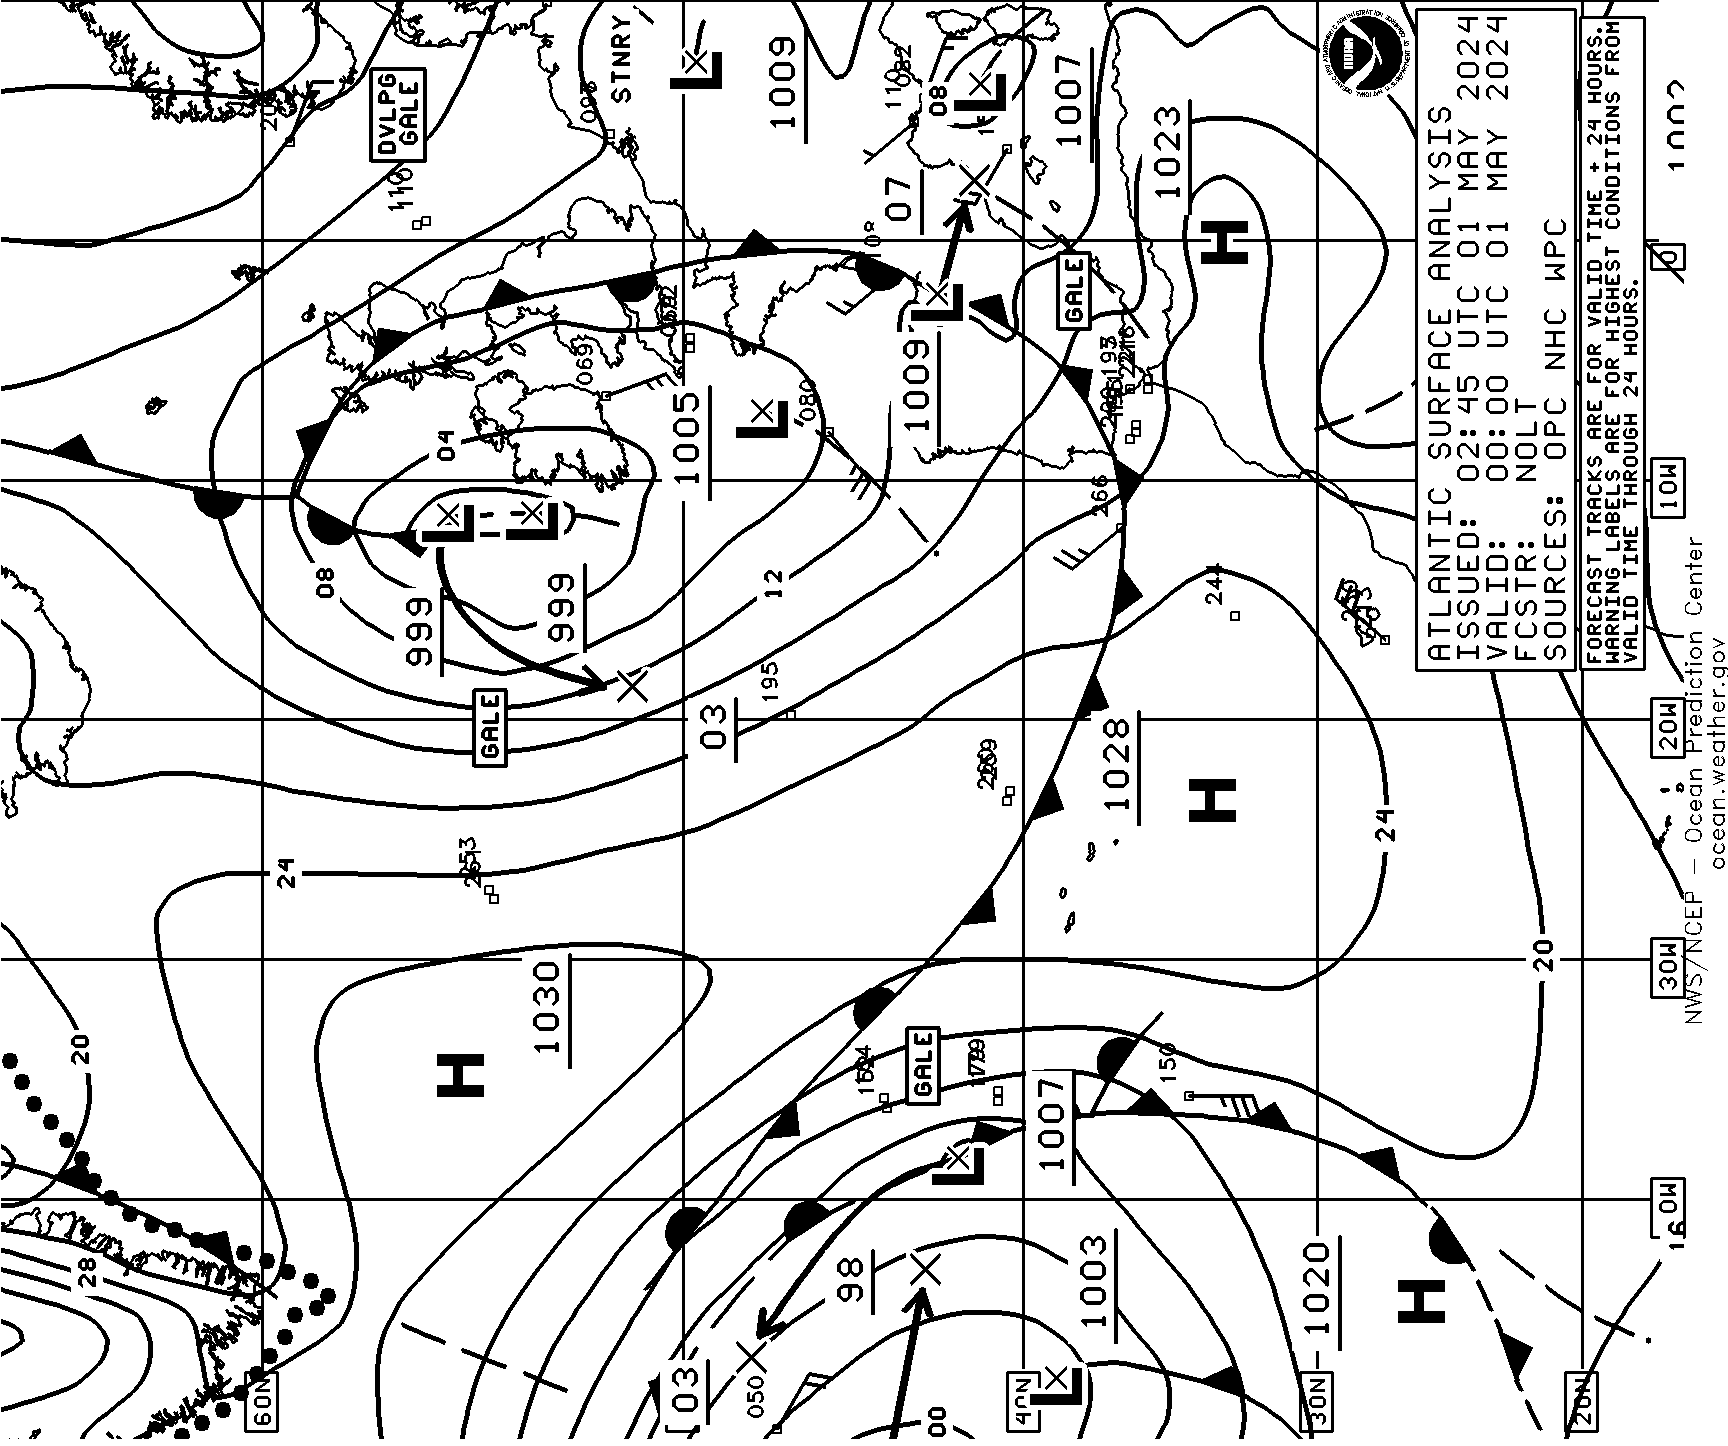 East Atlantic surface analysis 